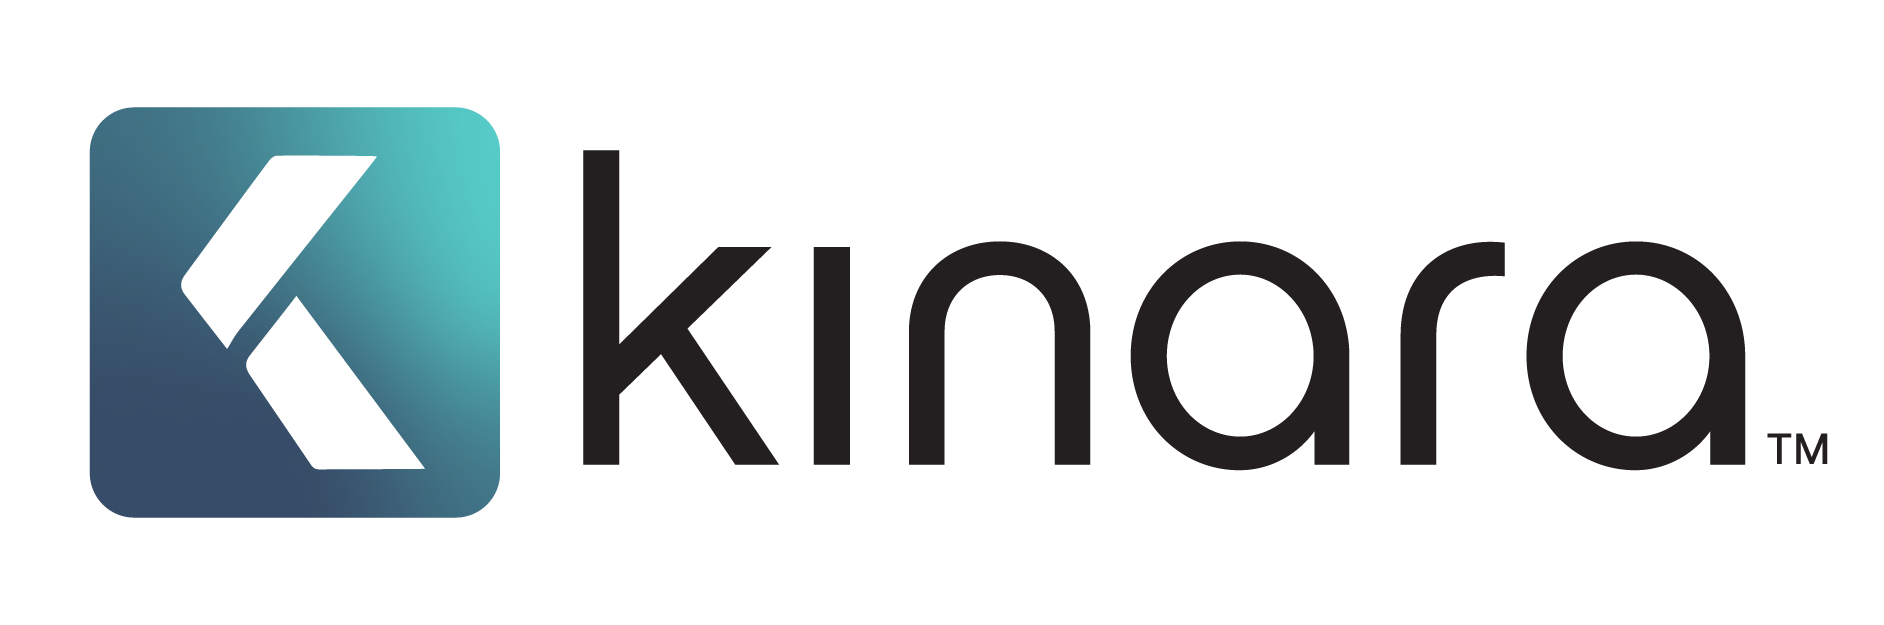 Kinara logo